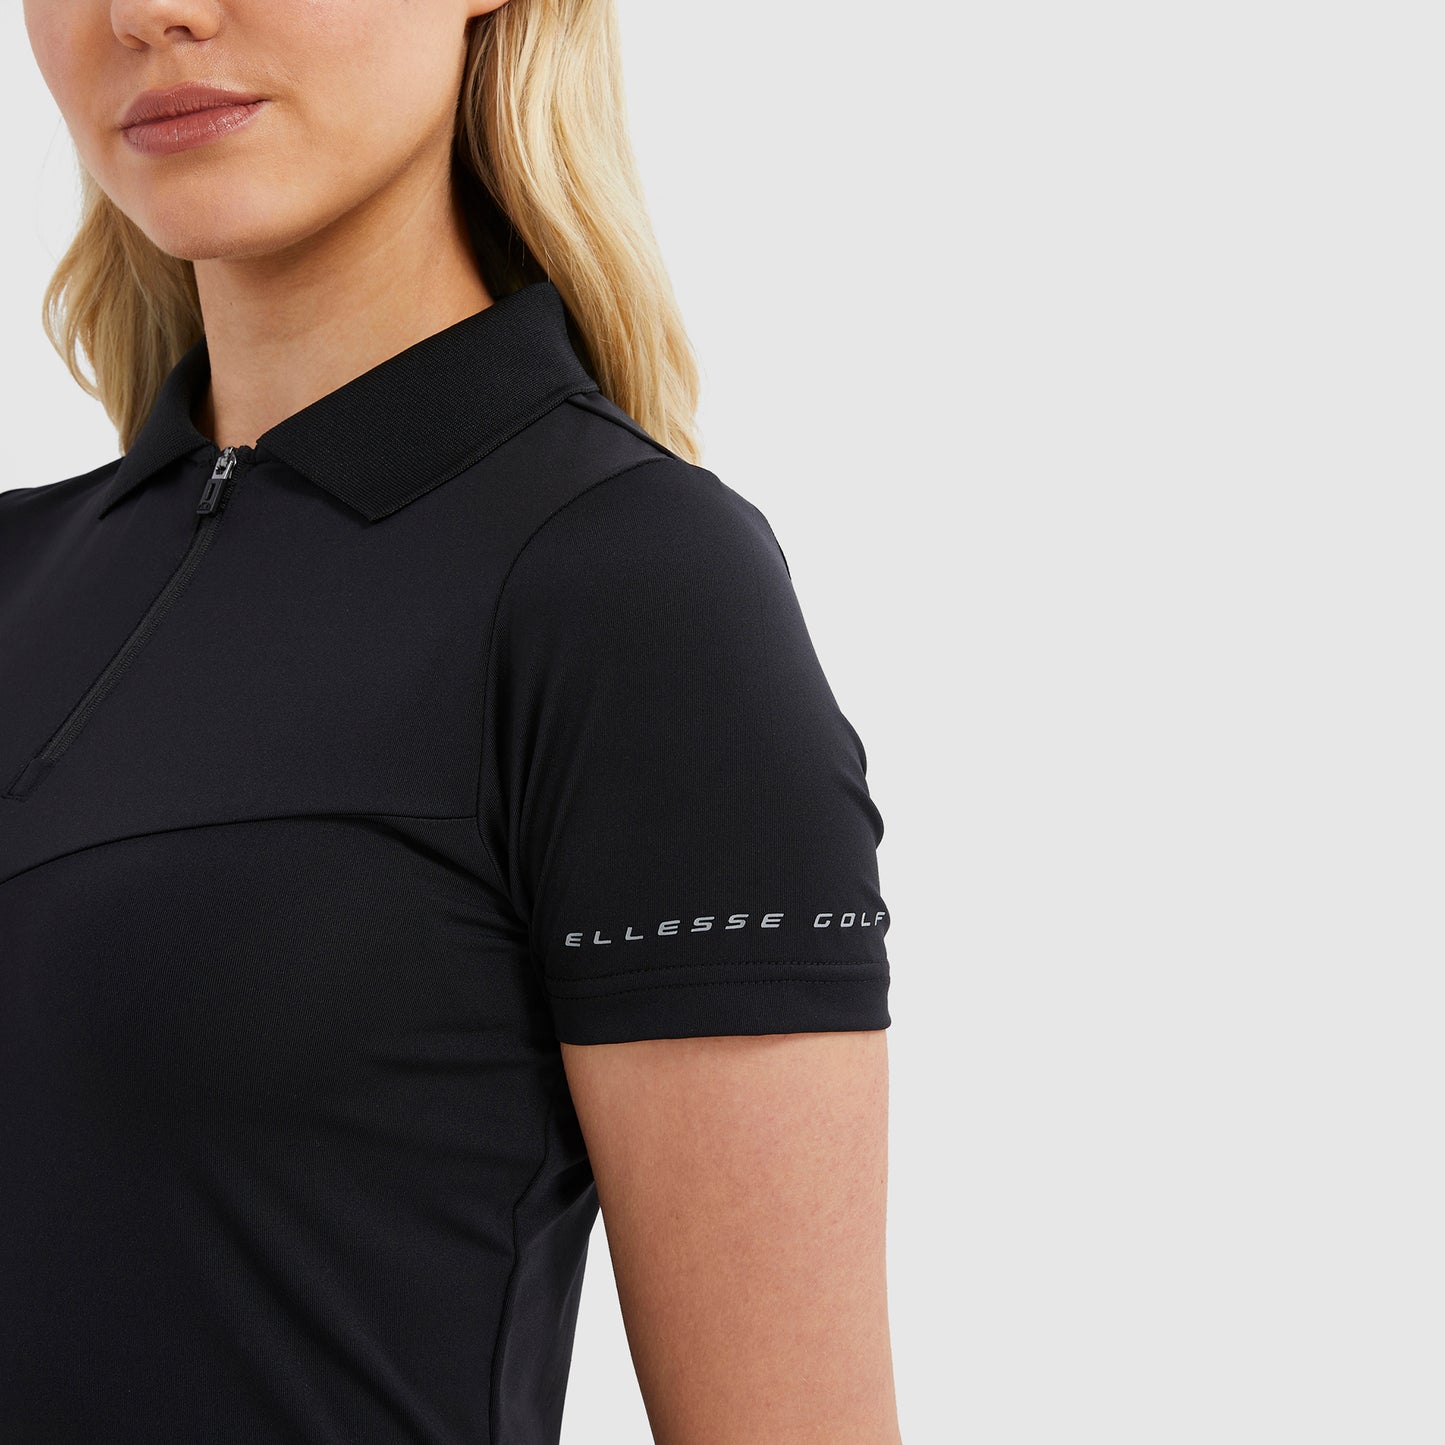 Ellesse Ladies Short Sleeve Polo in Black with Zip-Neck